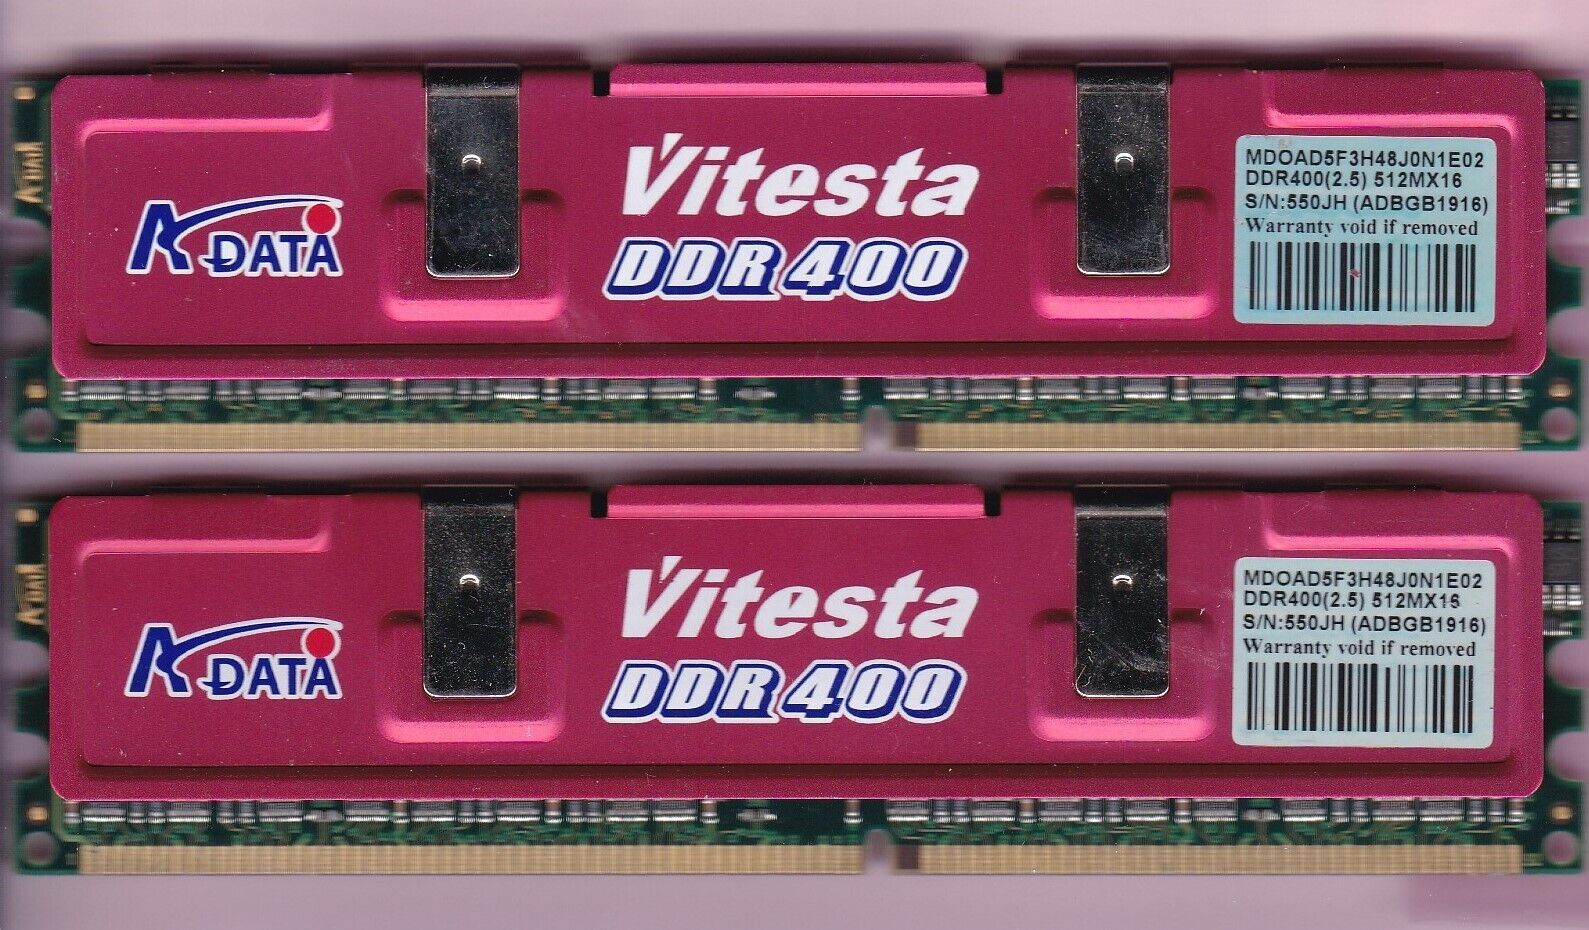 1GB 2x512MB PC-3200 ADATA VITESTA MDOAD5F3H48J0N1E02 DDR-400 CL2.5 RAM KIT DDR1